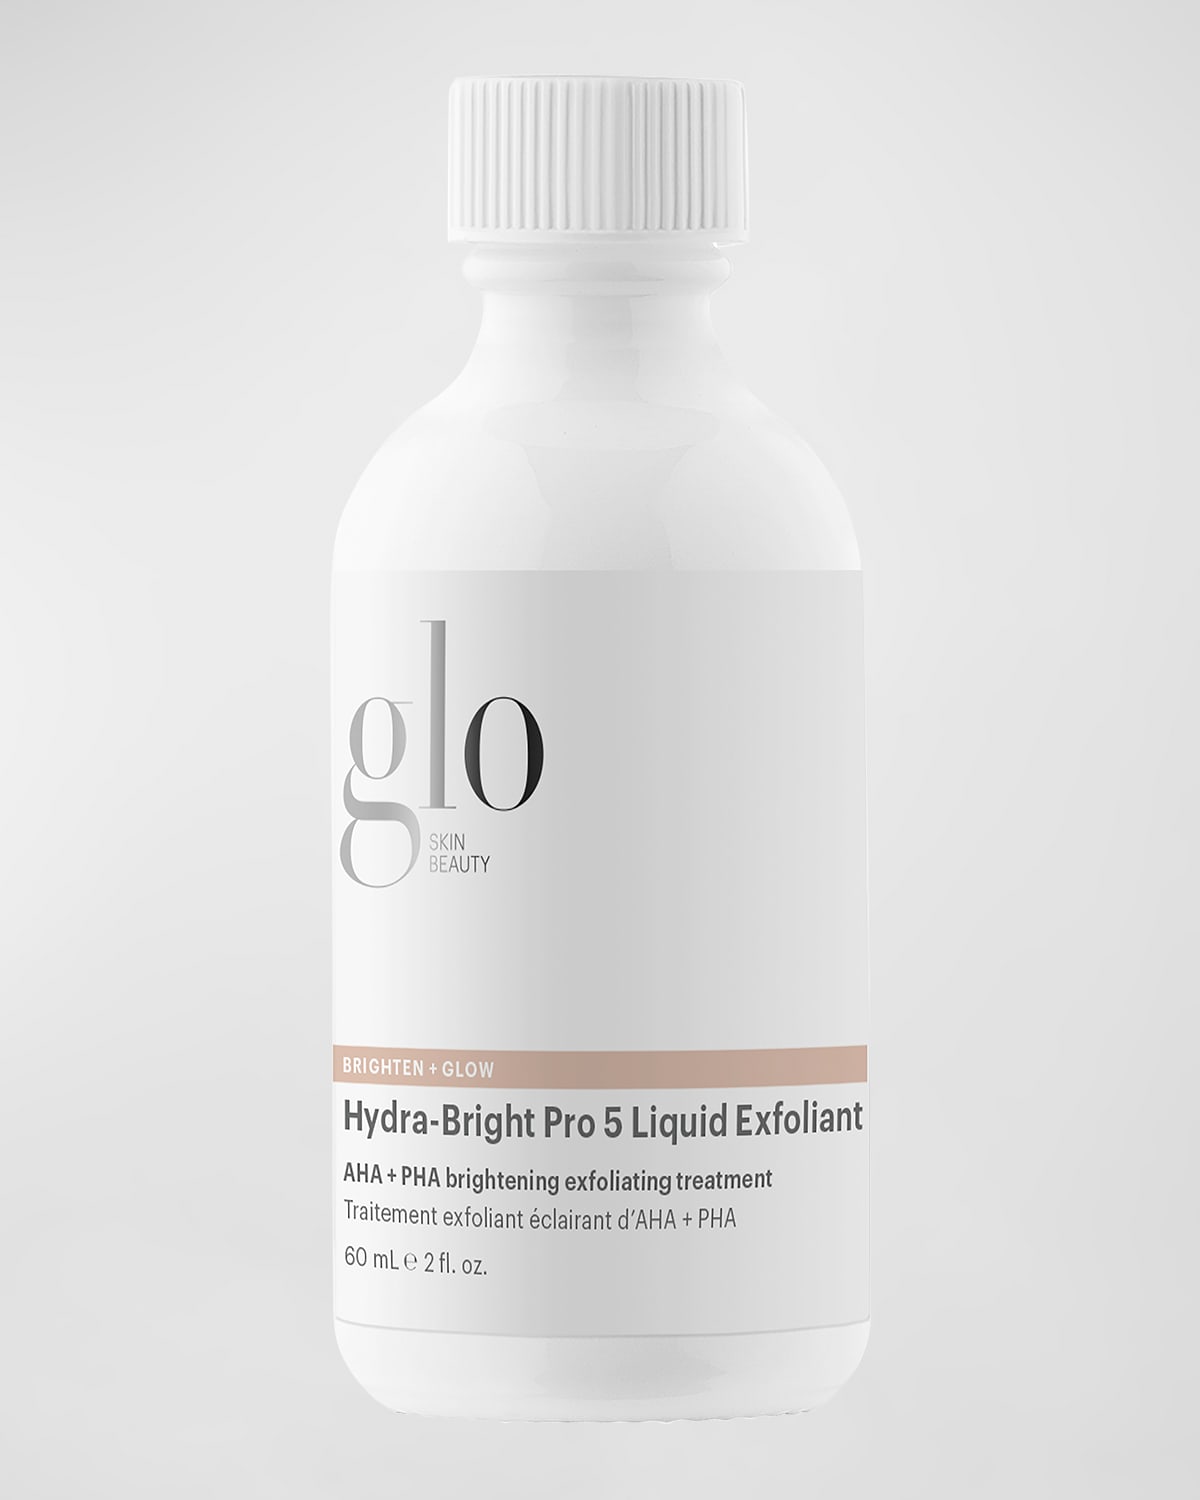 Glo Skin Beauty Hydra-Bright Pro 5 Liquid Exfoliant, 2 oz.